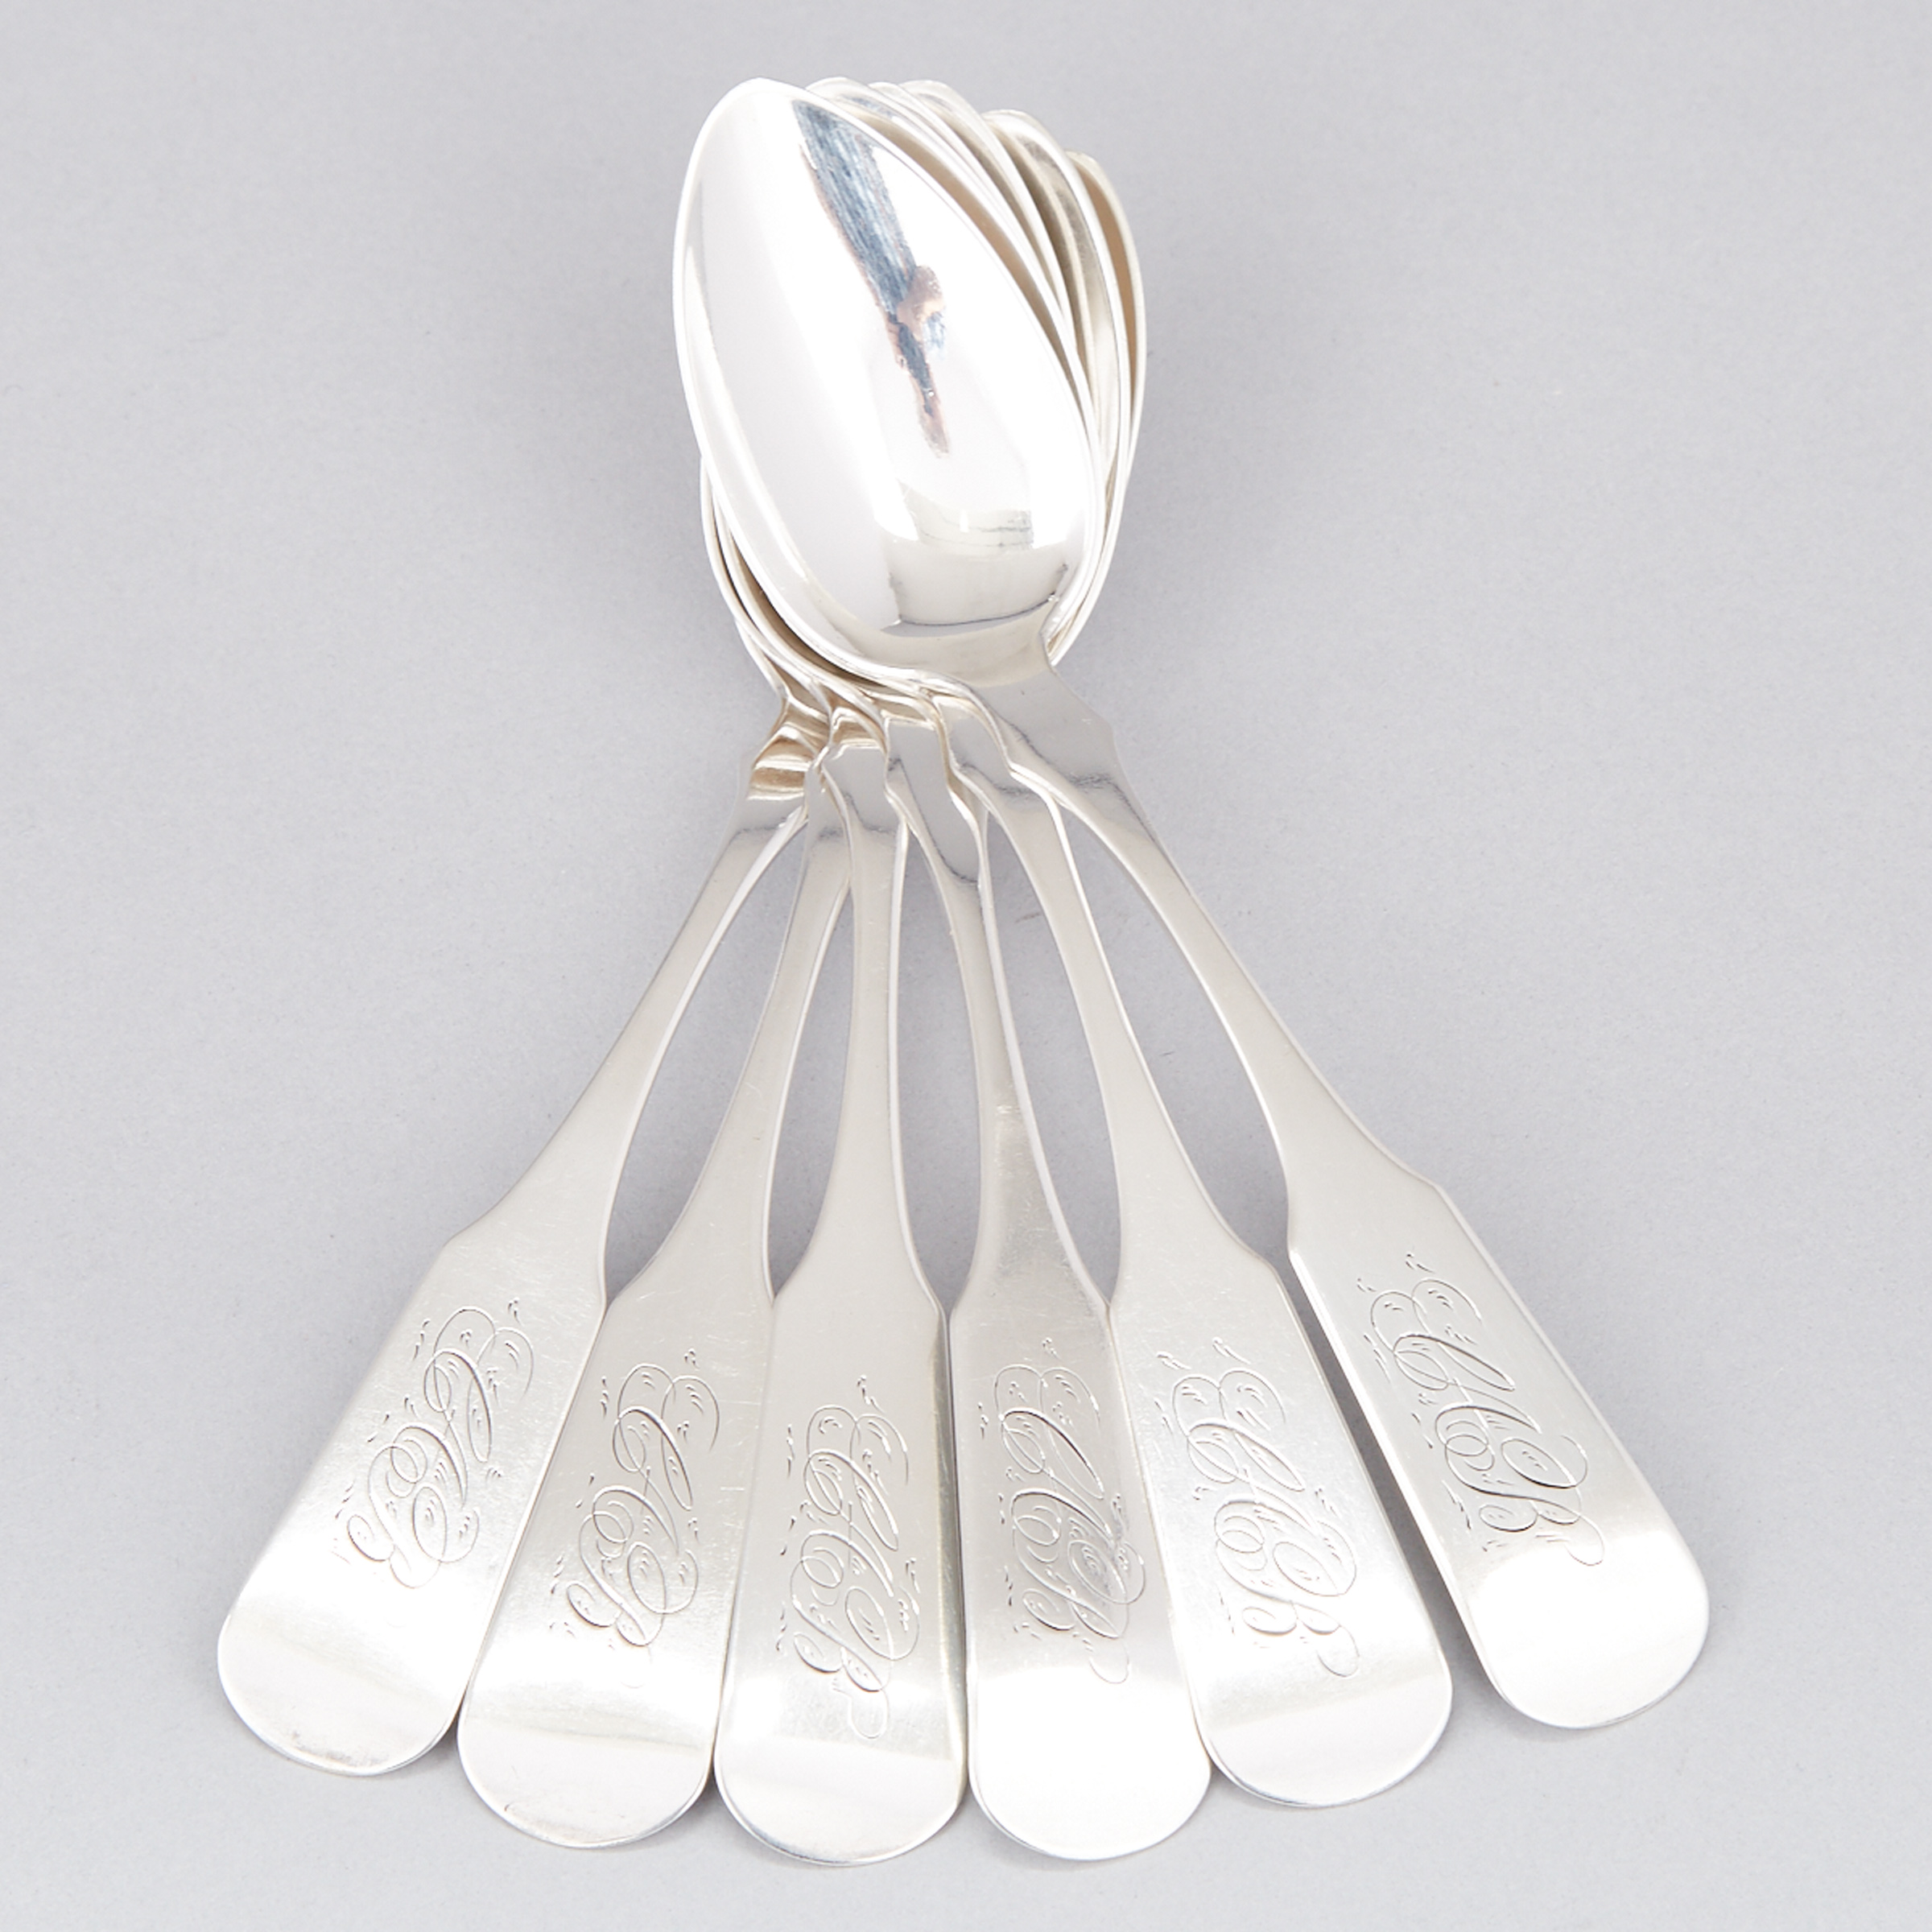 Six Canadian Silver Tea Spoons, William Norris Venning, Saint John, N.B., mid-19th century